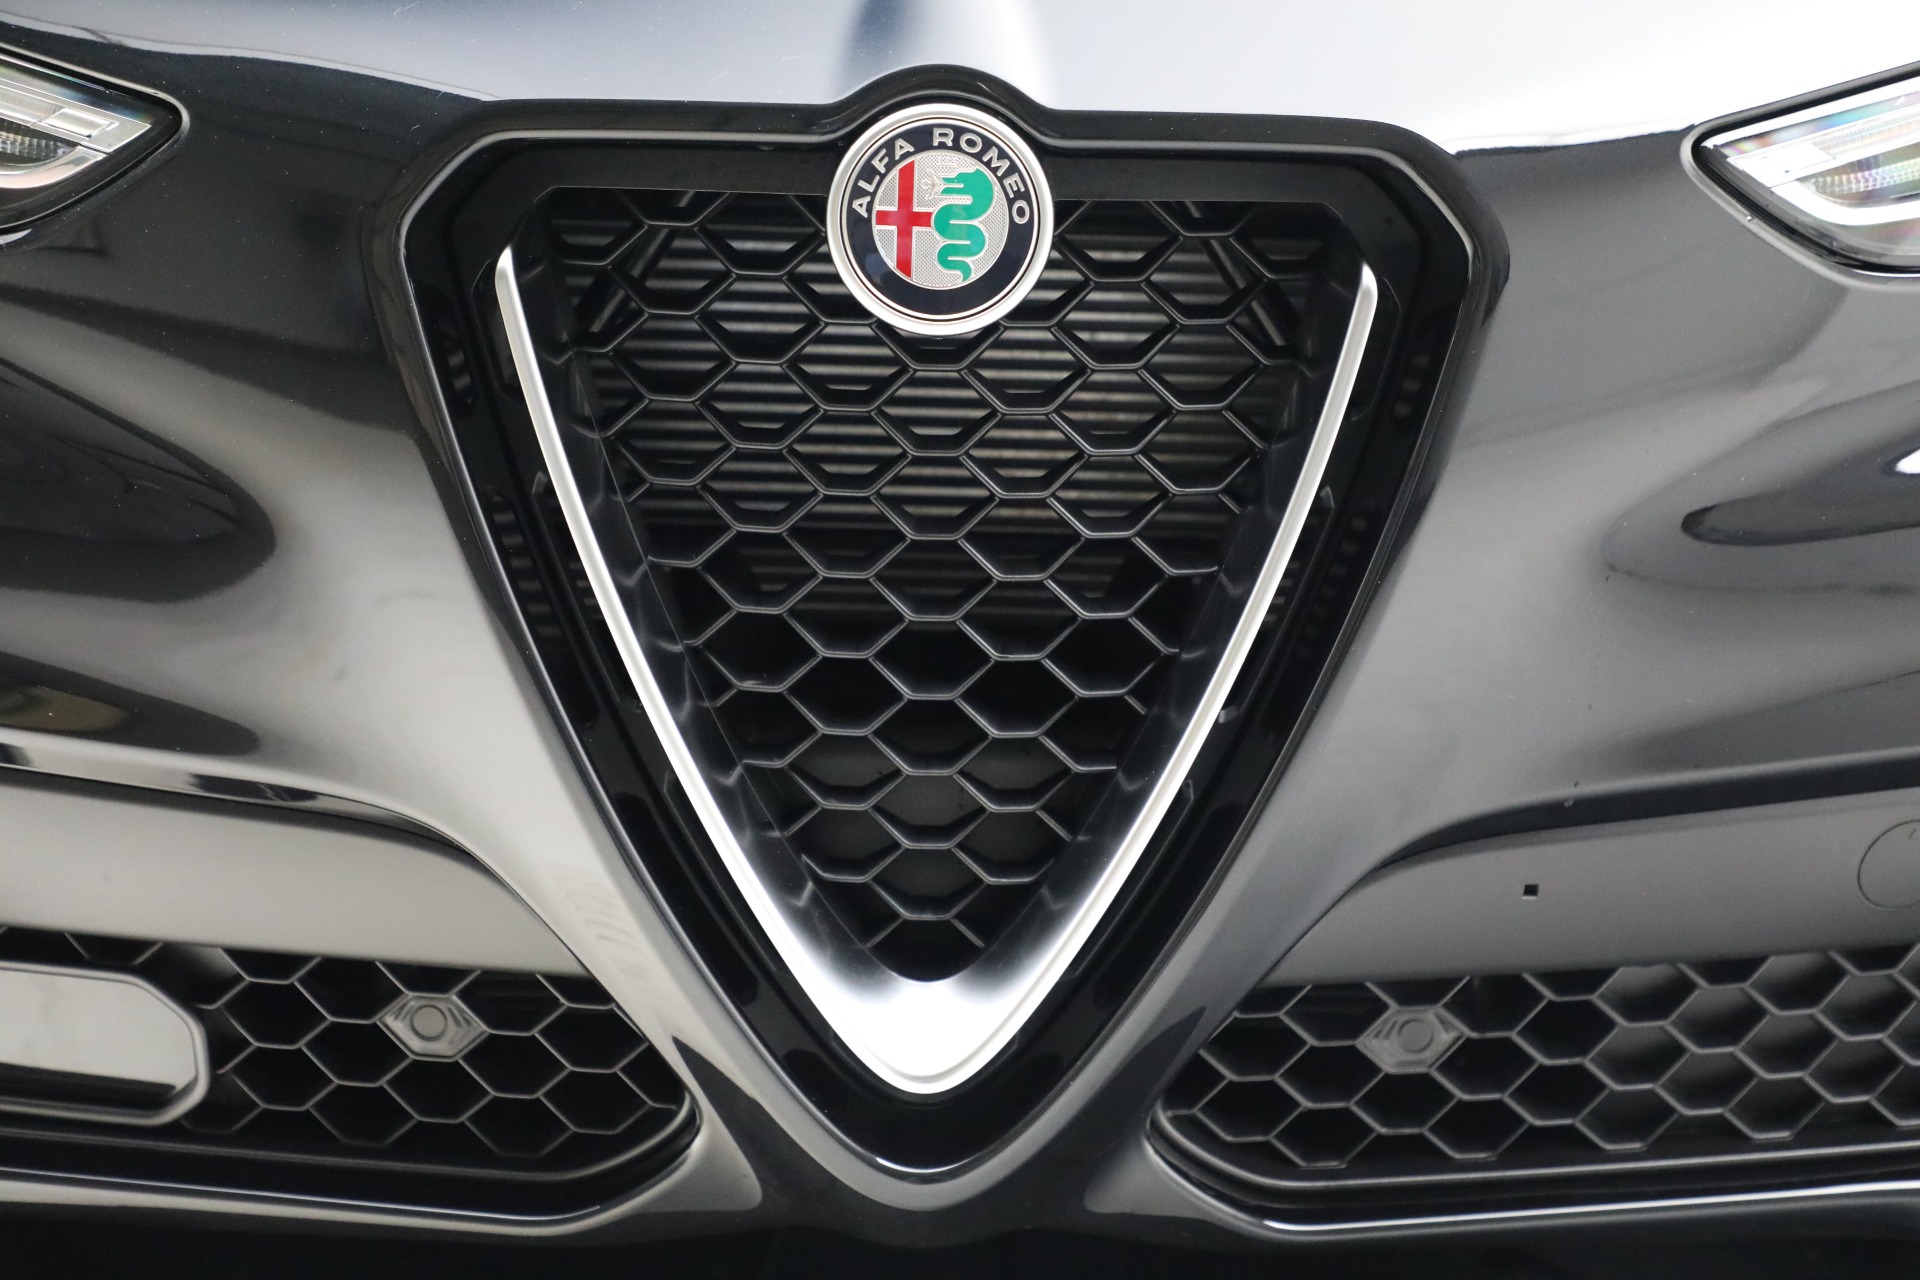 New-2022-Alfa-Romeo-Stelvio-Ti